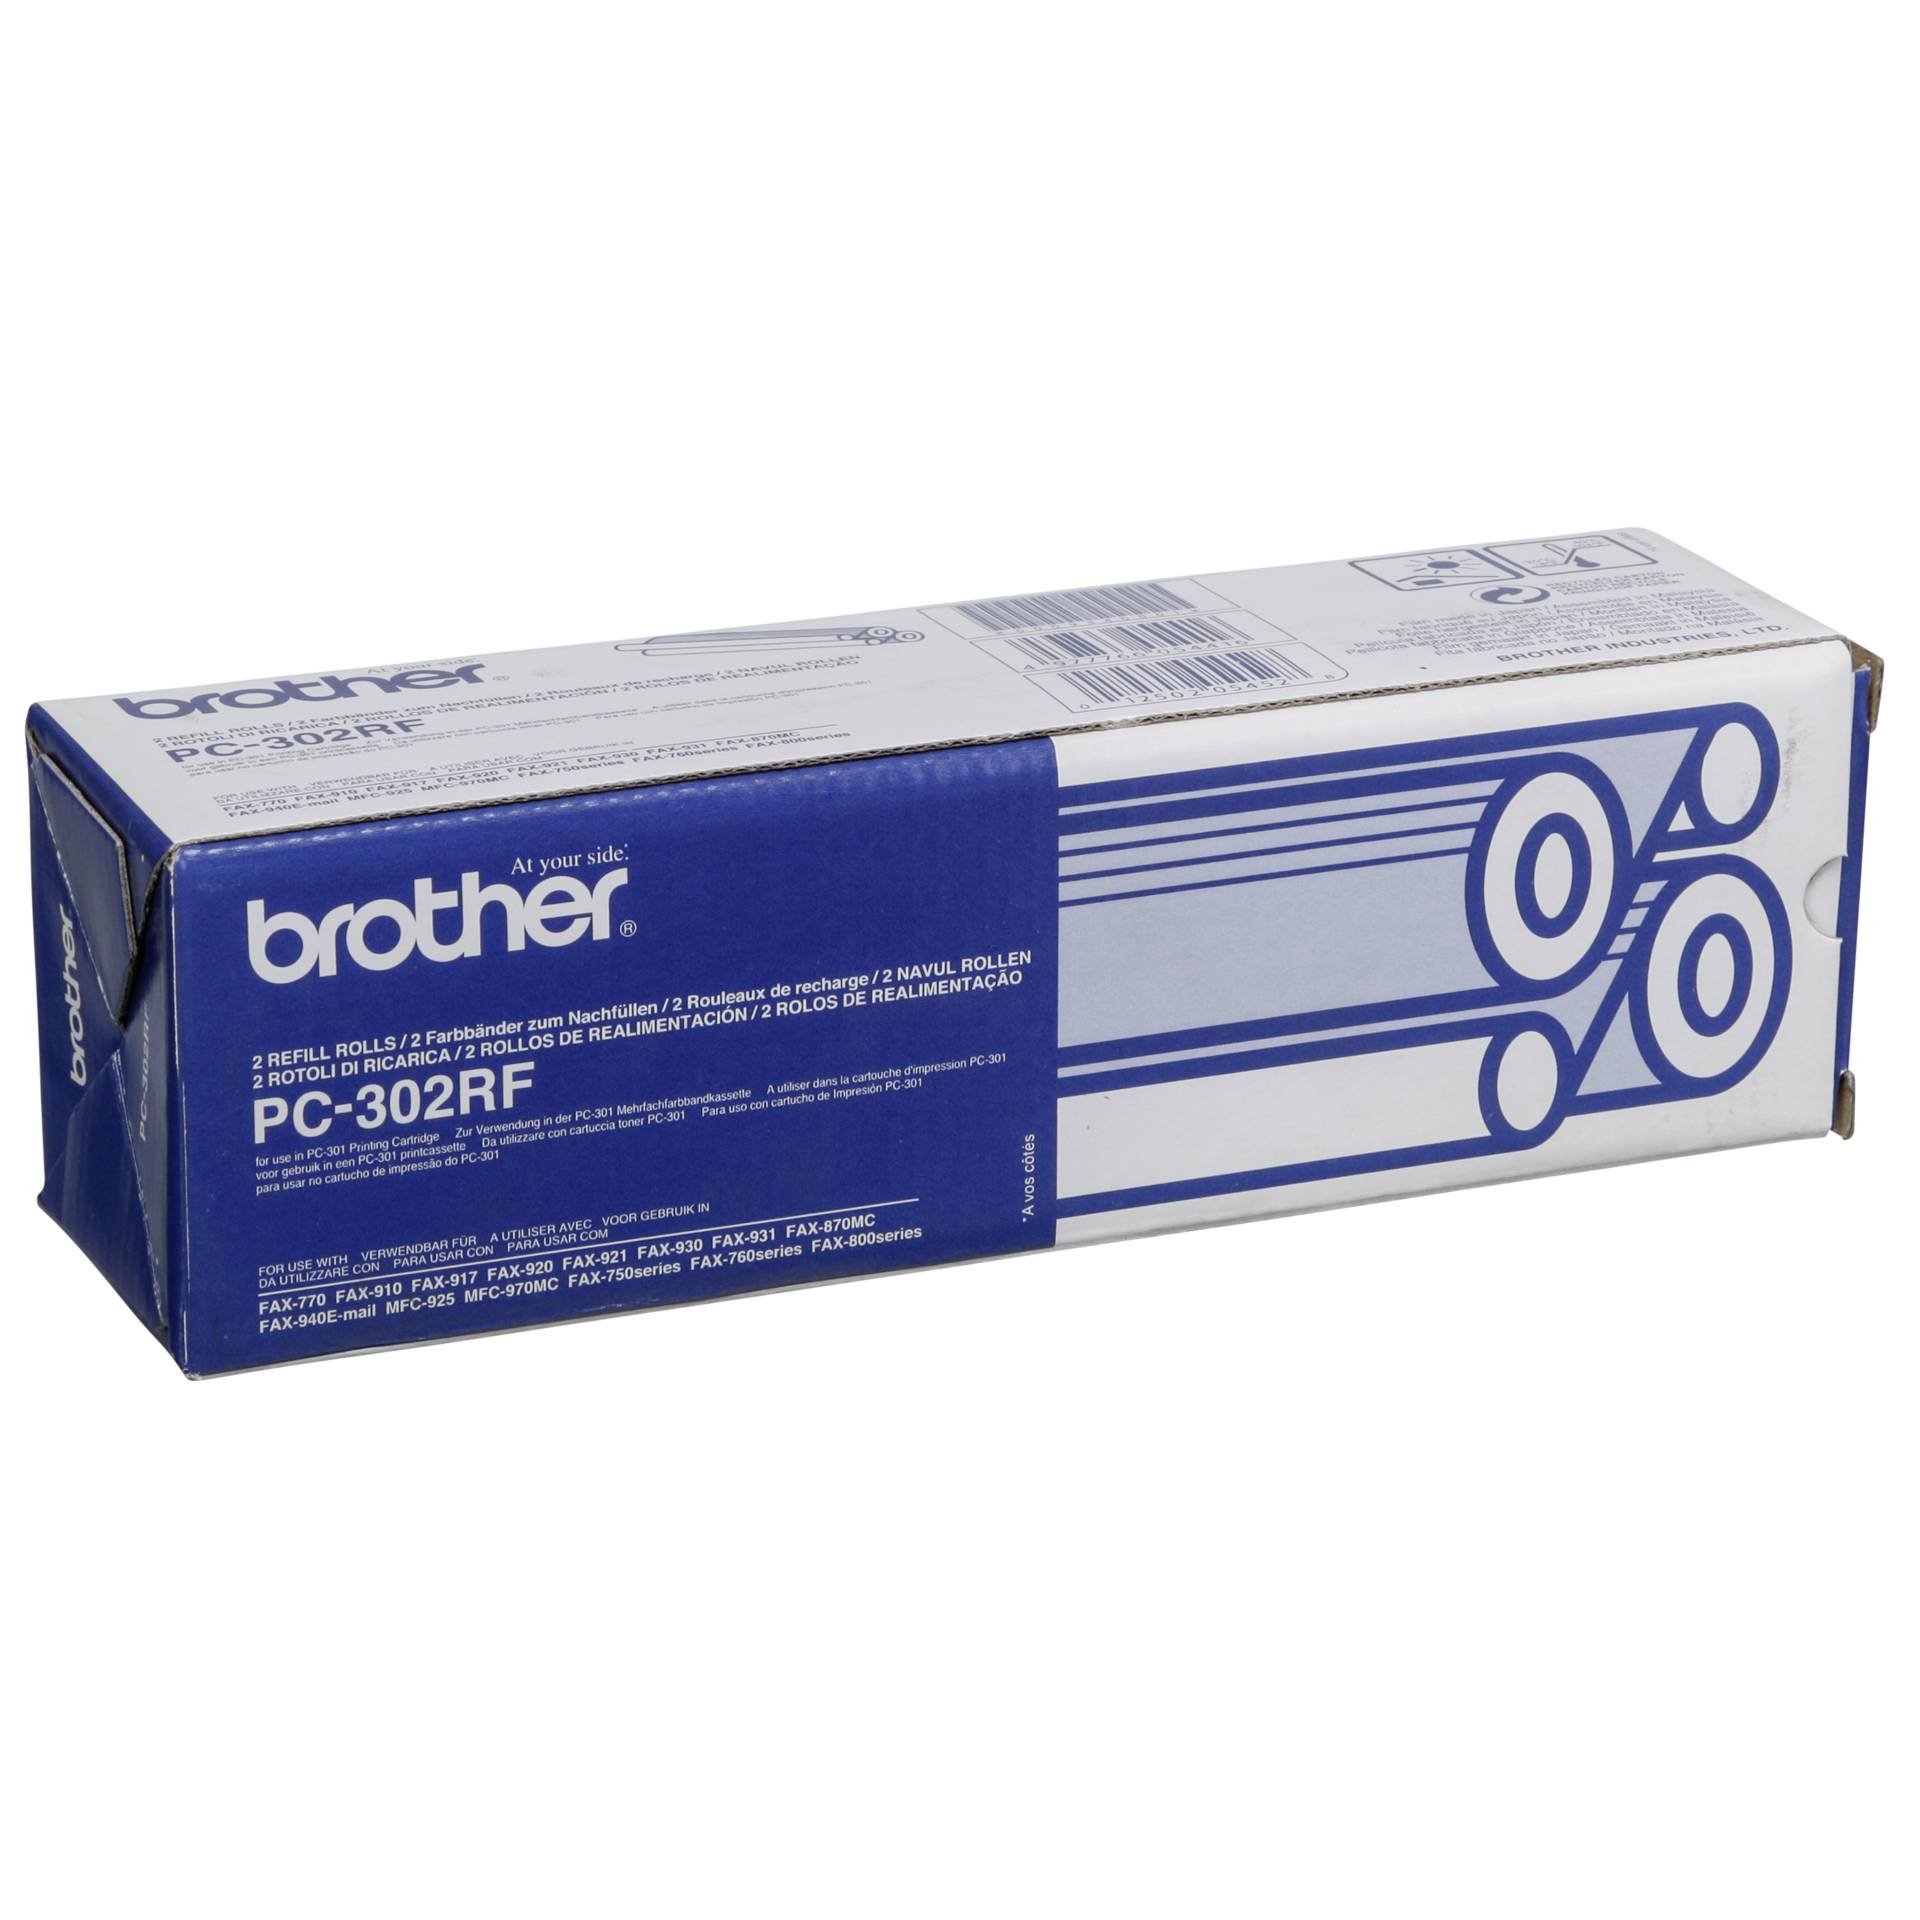 Brother PC 302 RF 2 Refill Rolls